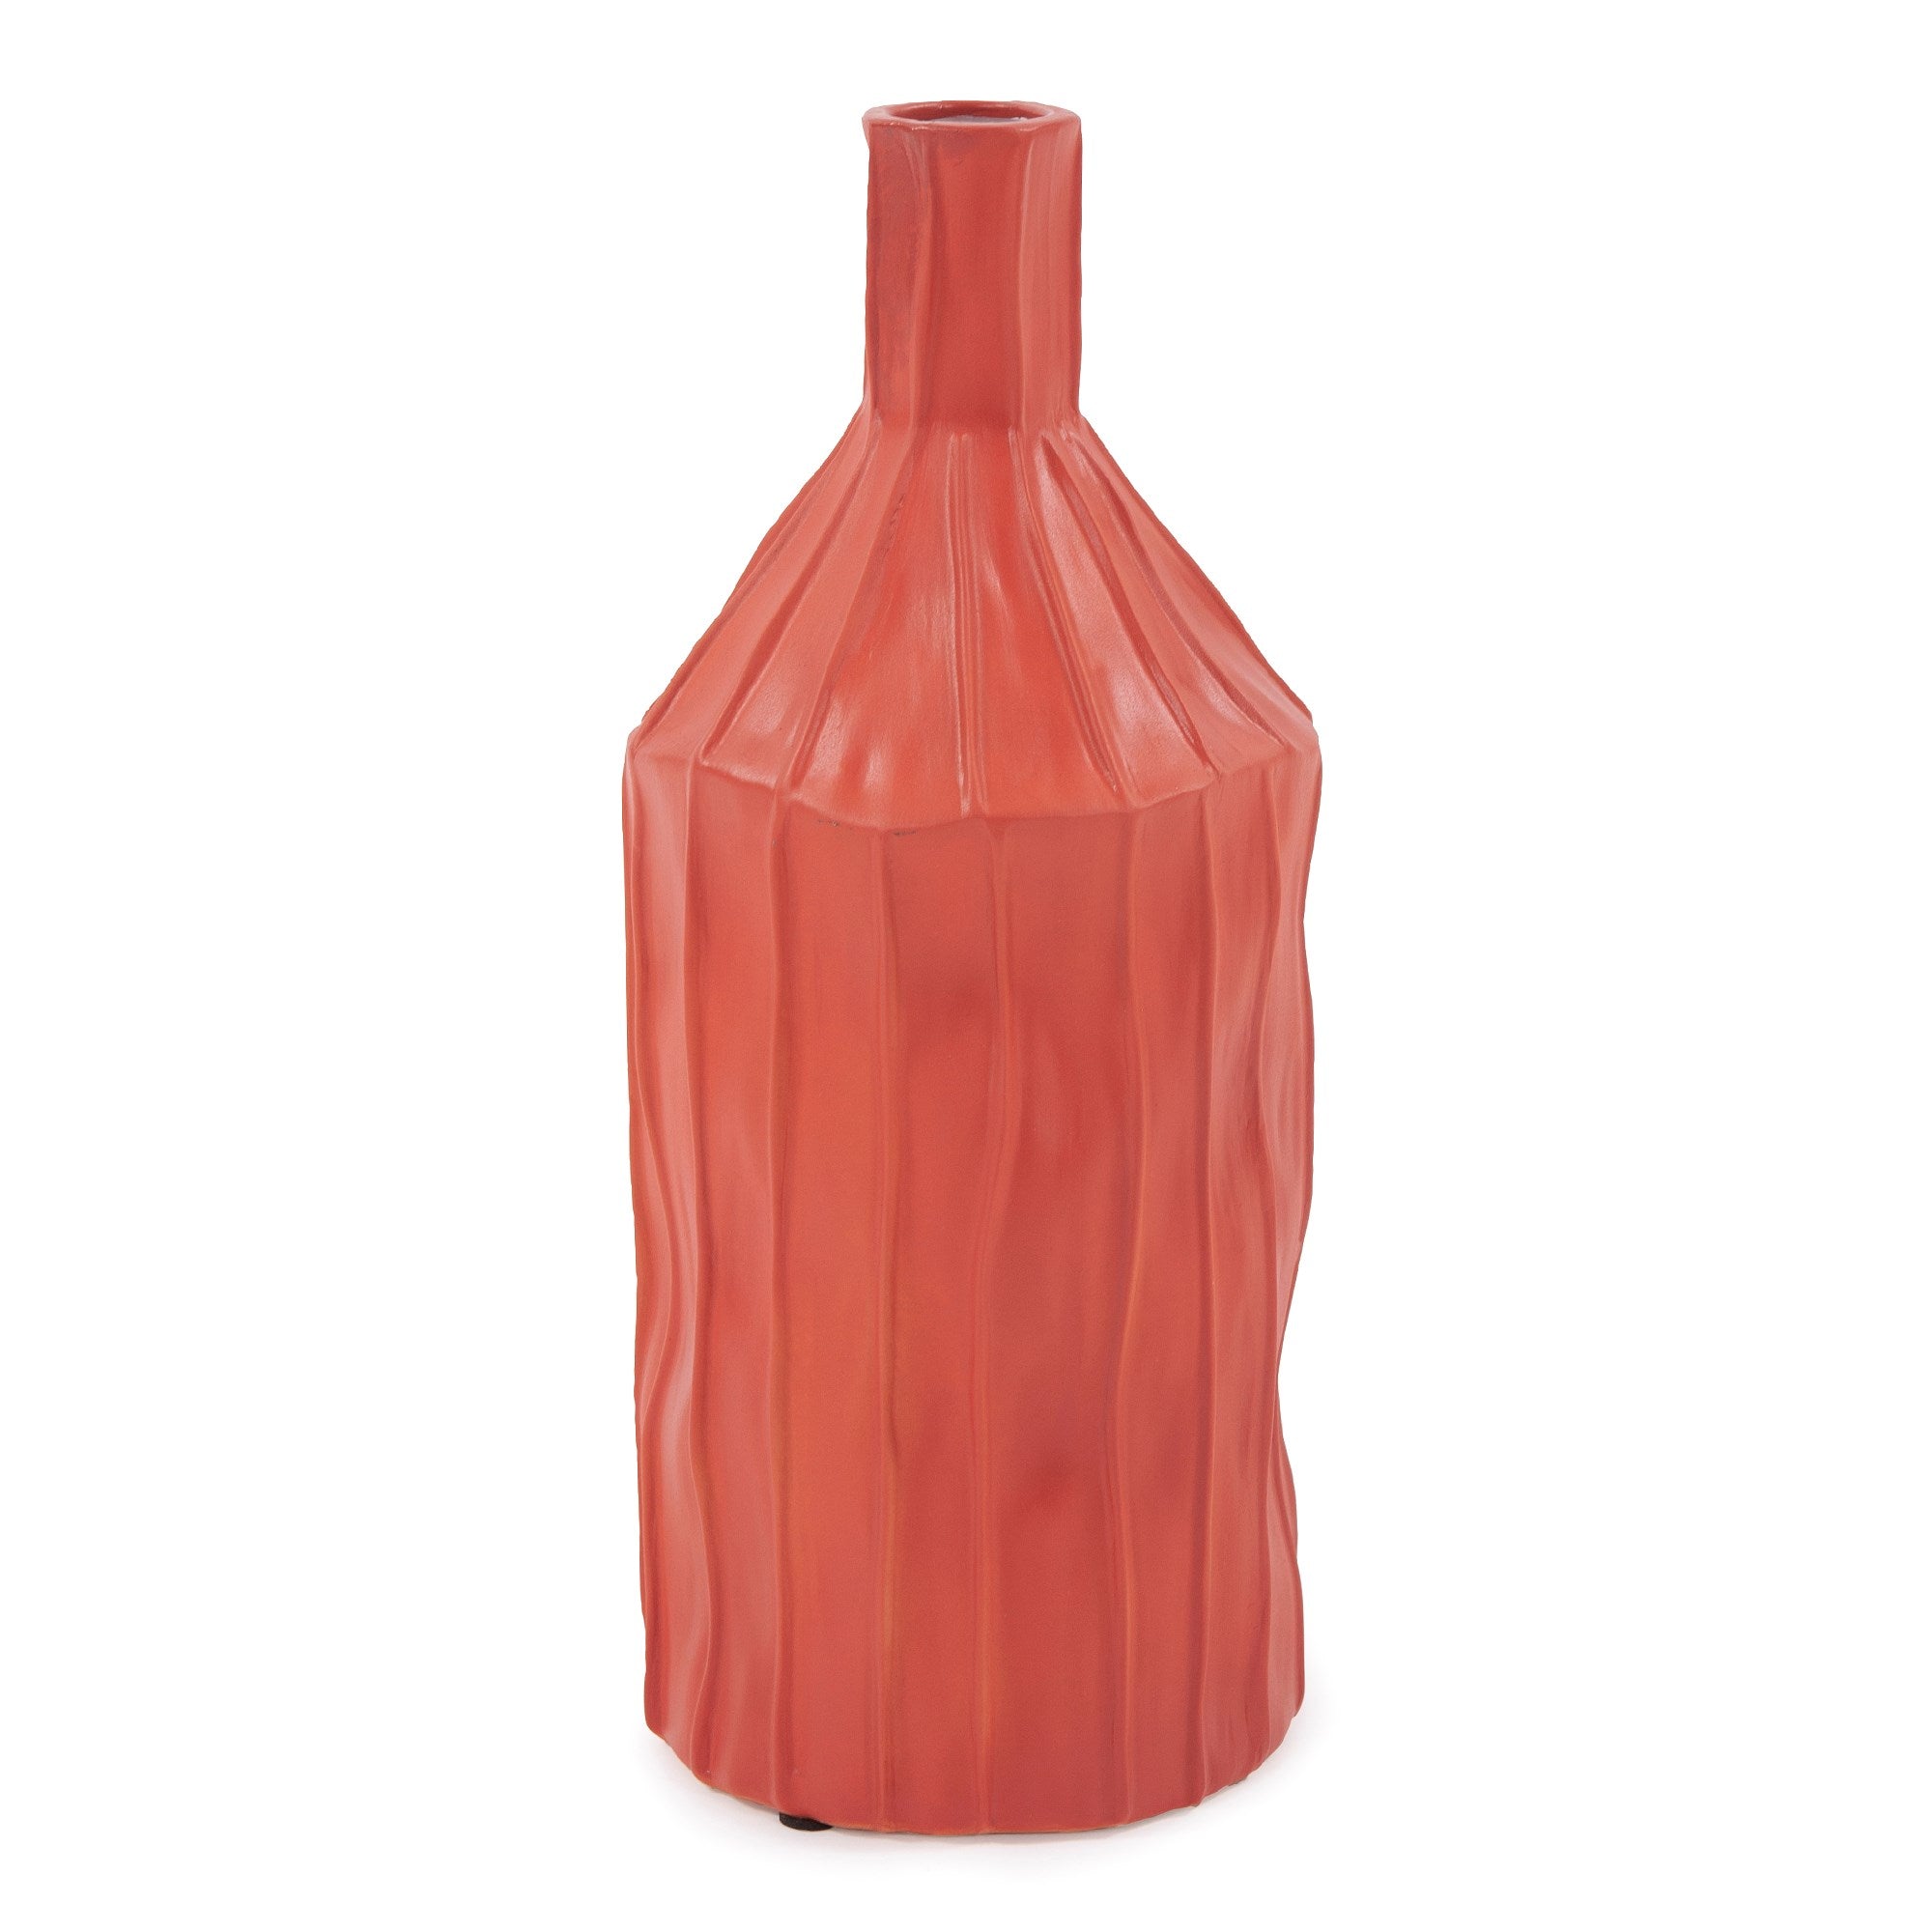 Coral Red Ribbed Ceramic Bottle